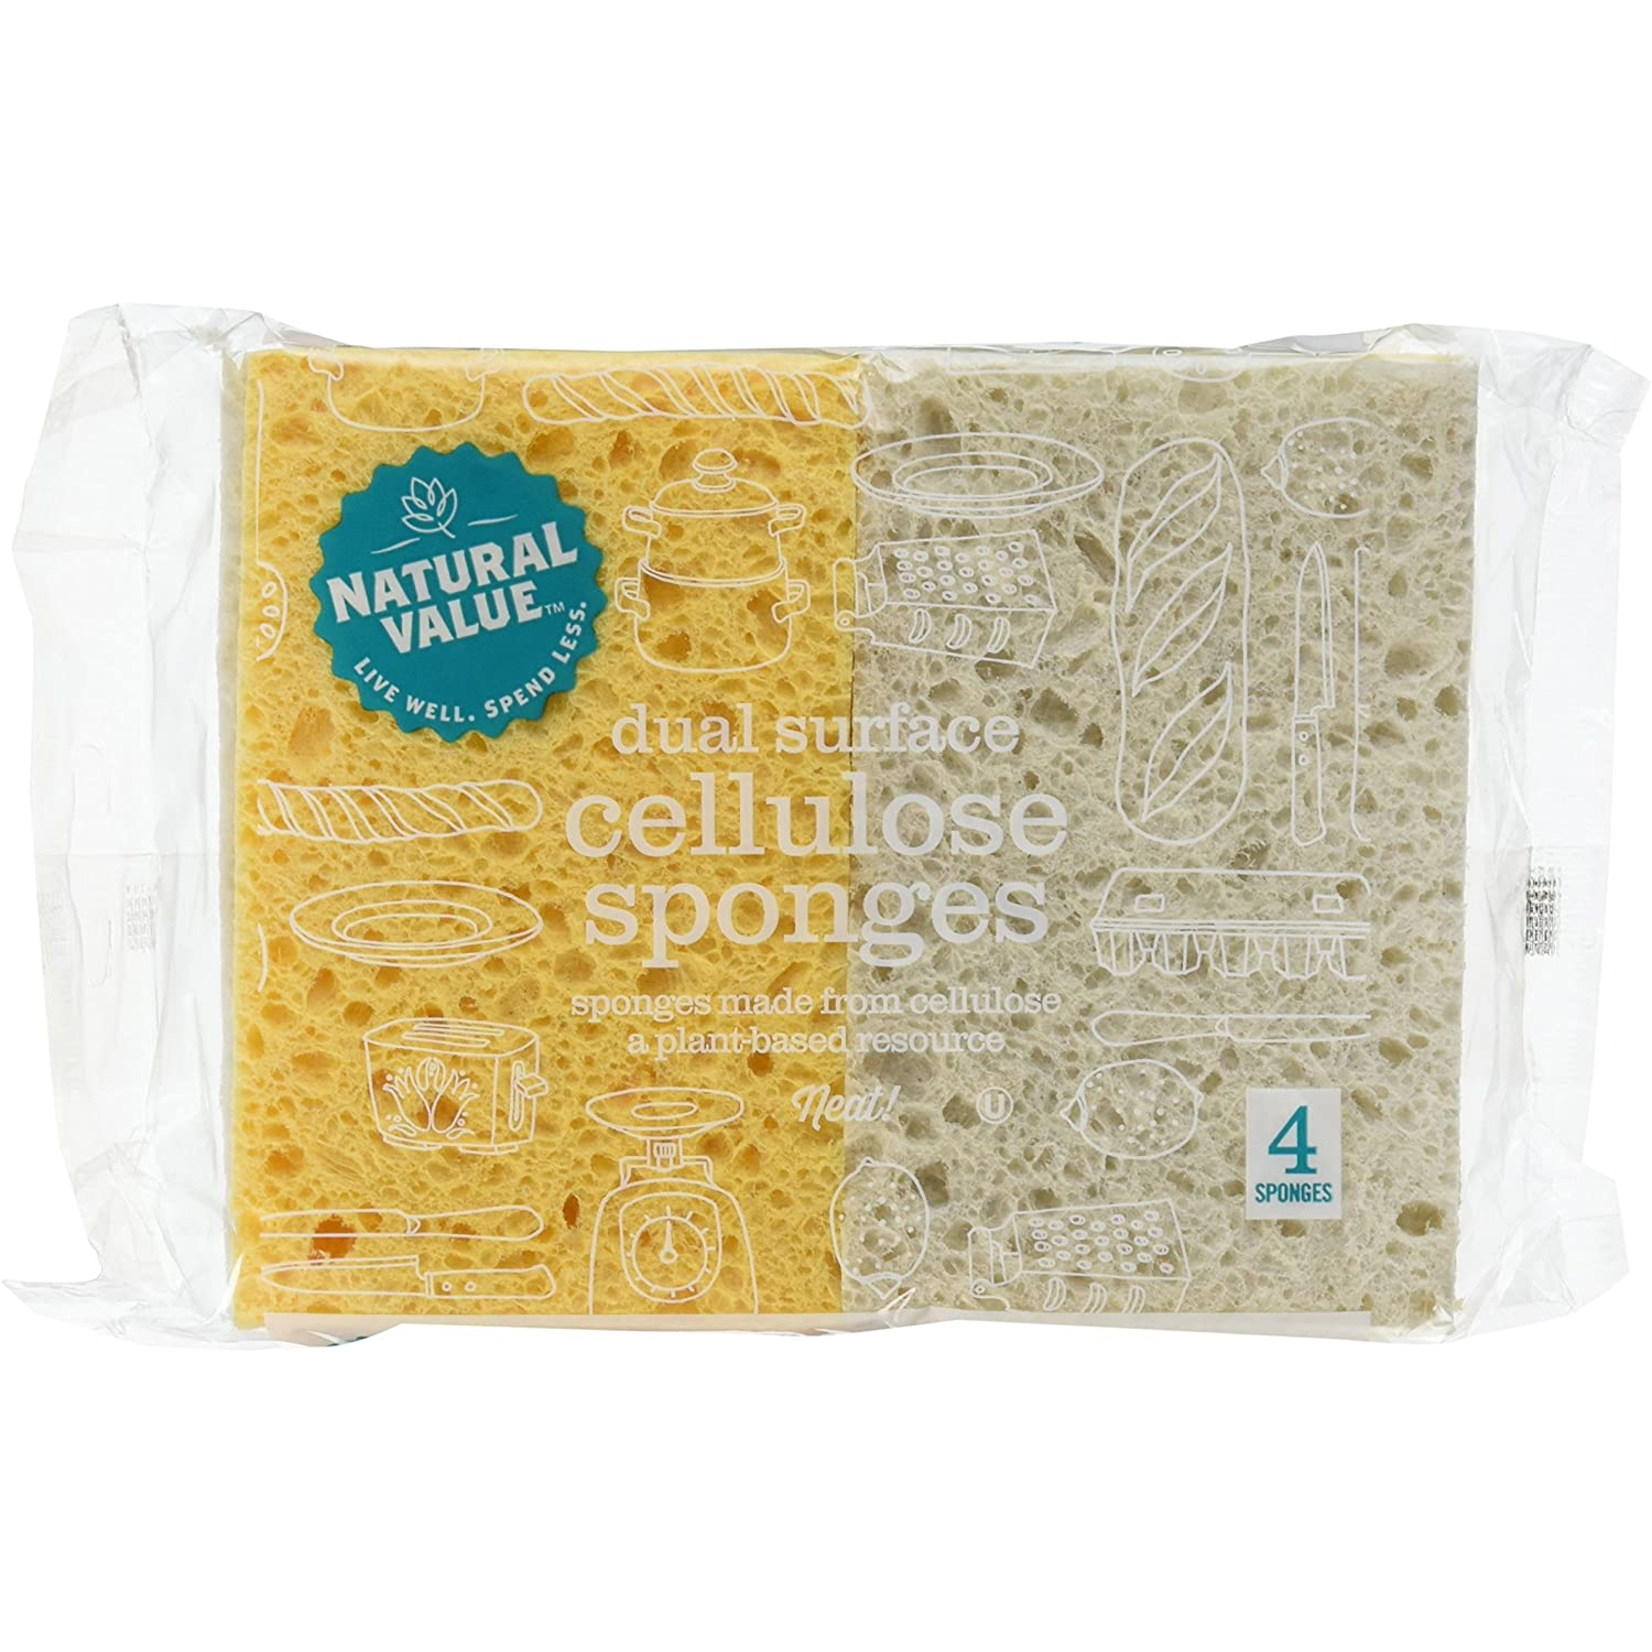 Natural Value Natural Value Dual Surface Cellulose Sponge - 4pk